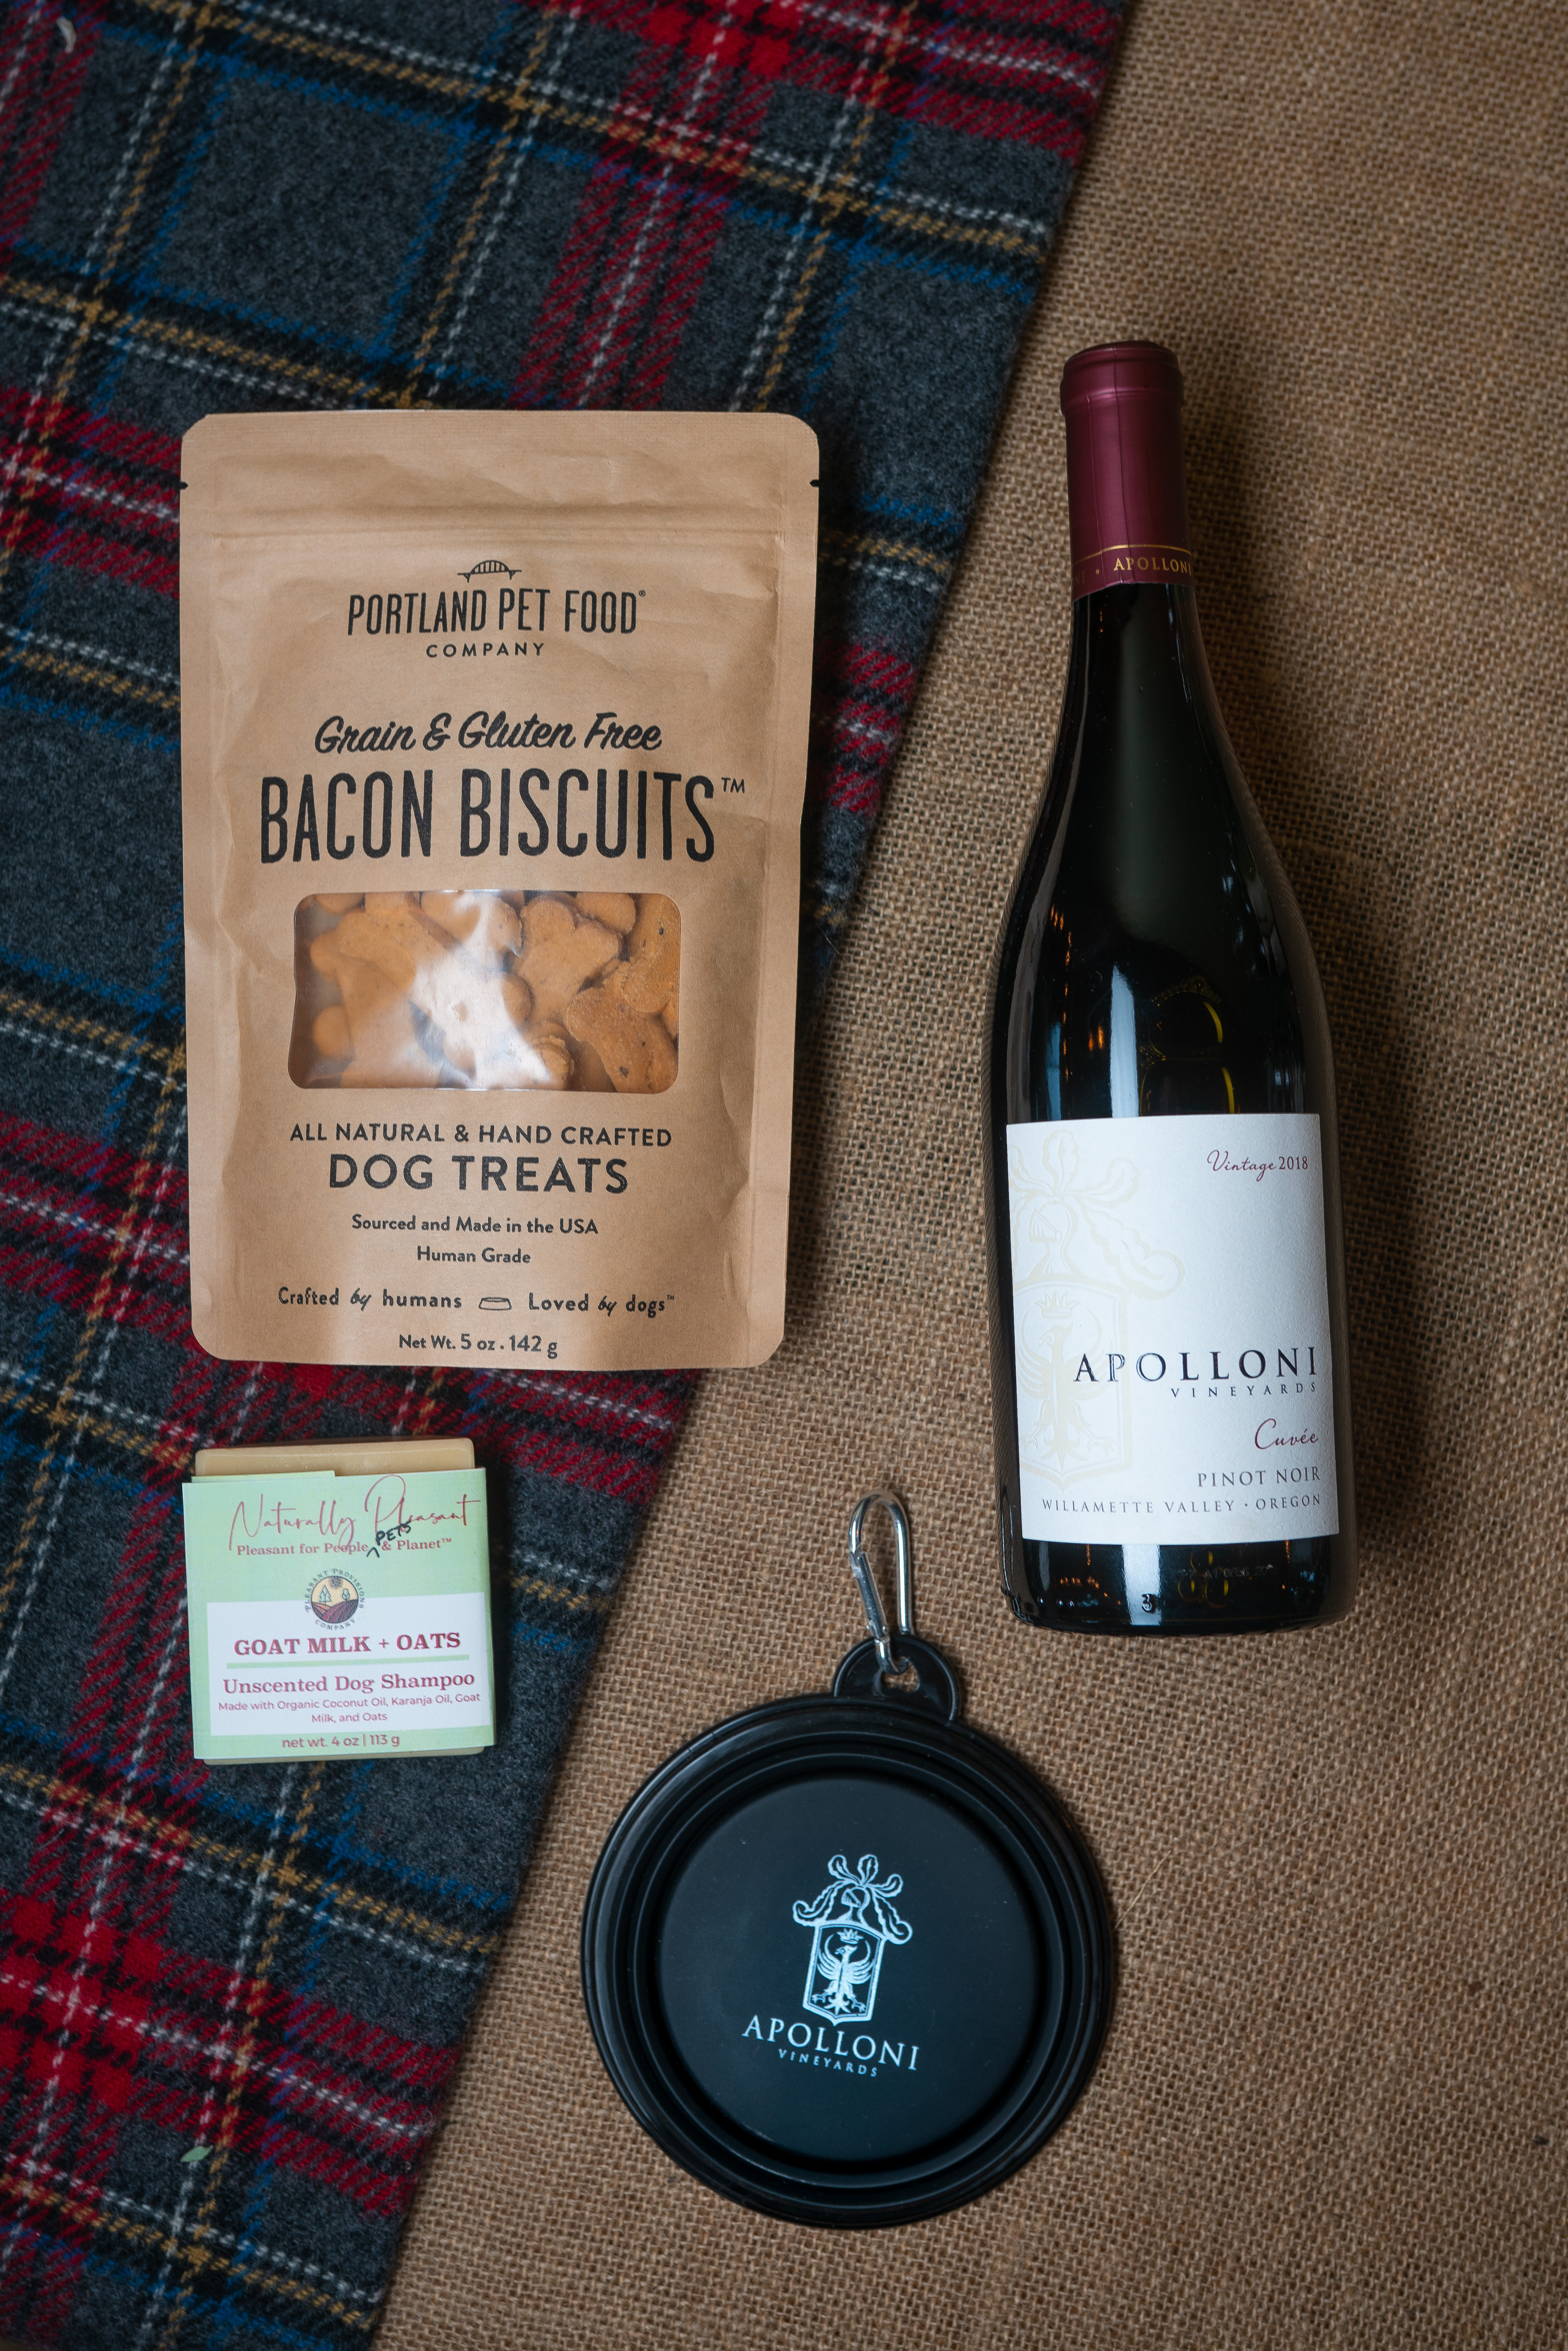 Dog treats and Apolloni wine gift set